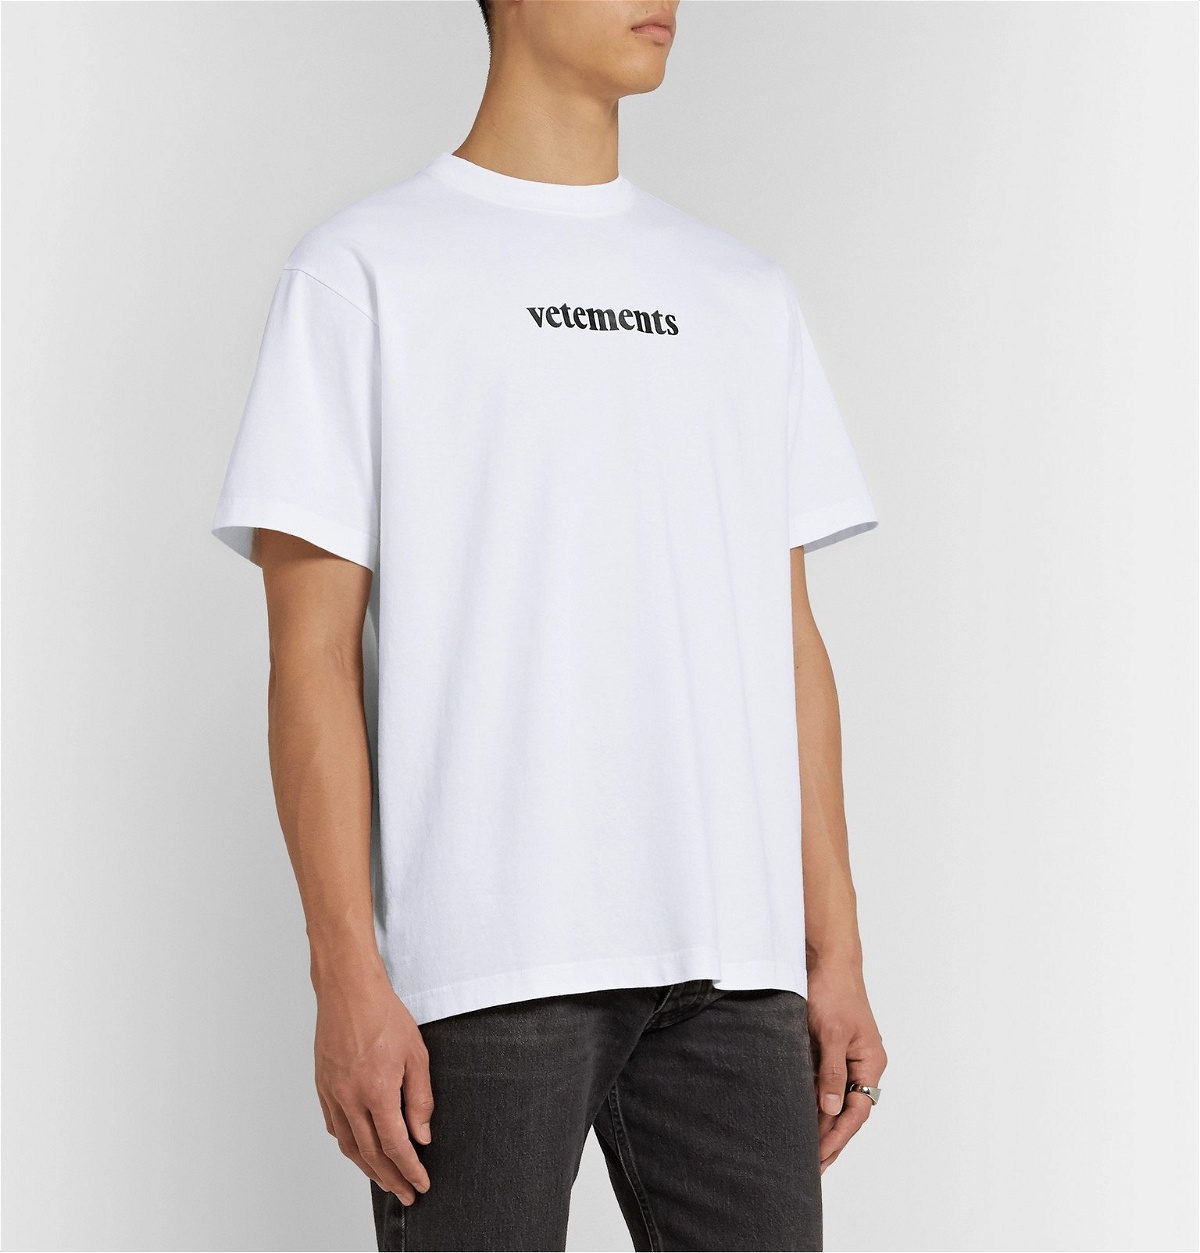 Vetements - Appliquéd Logo-Print Cotton-Jersey T-Shirt - White Vetements